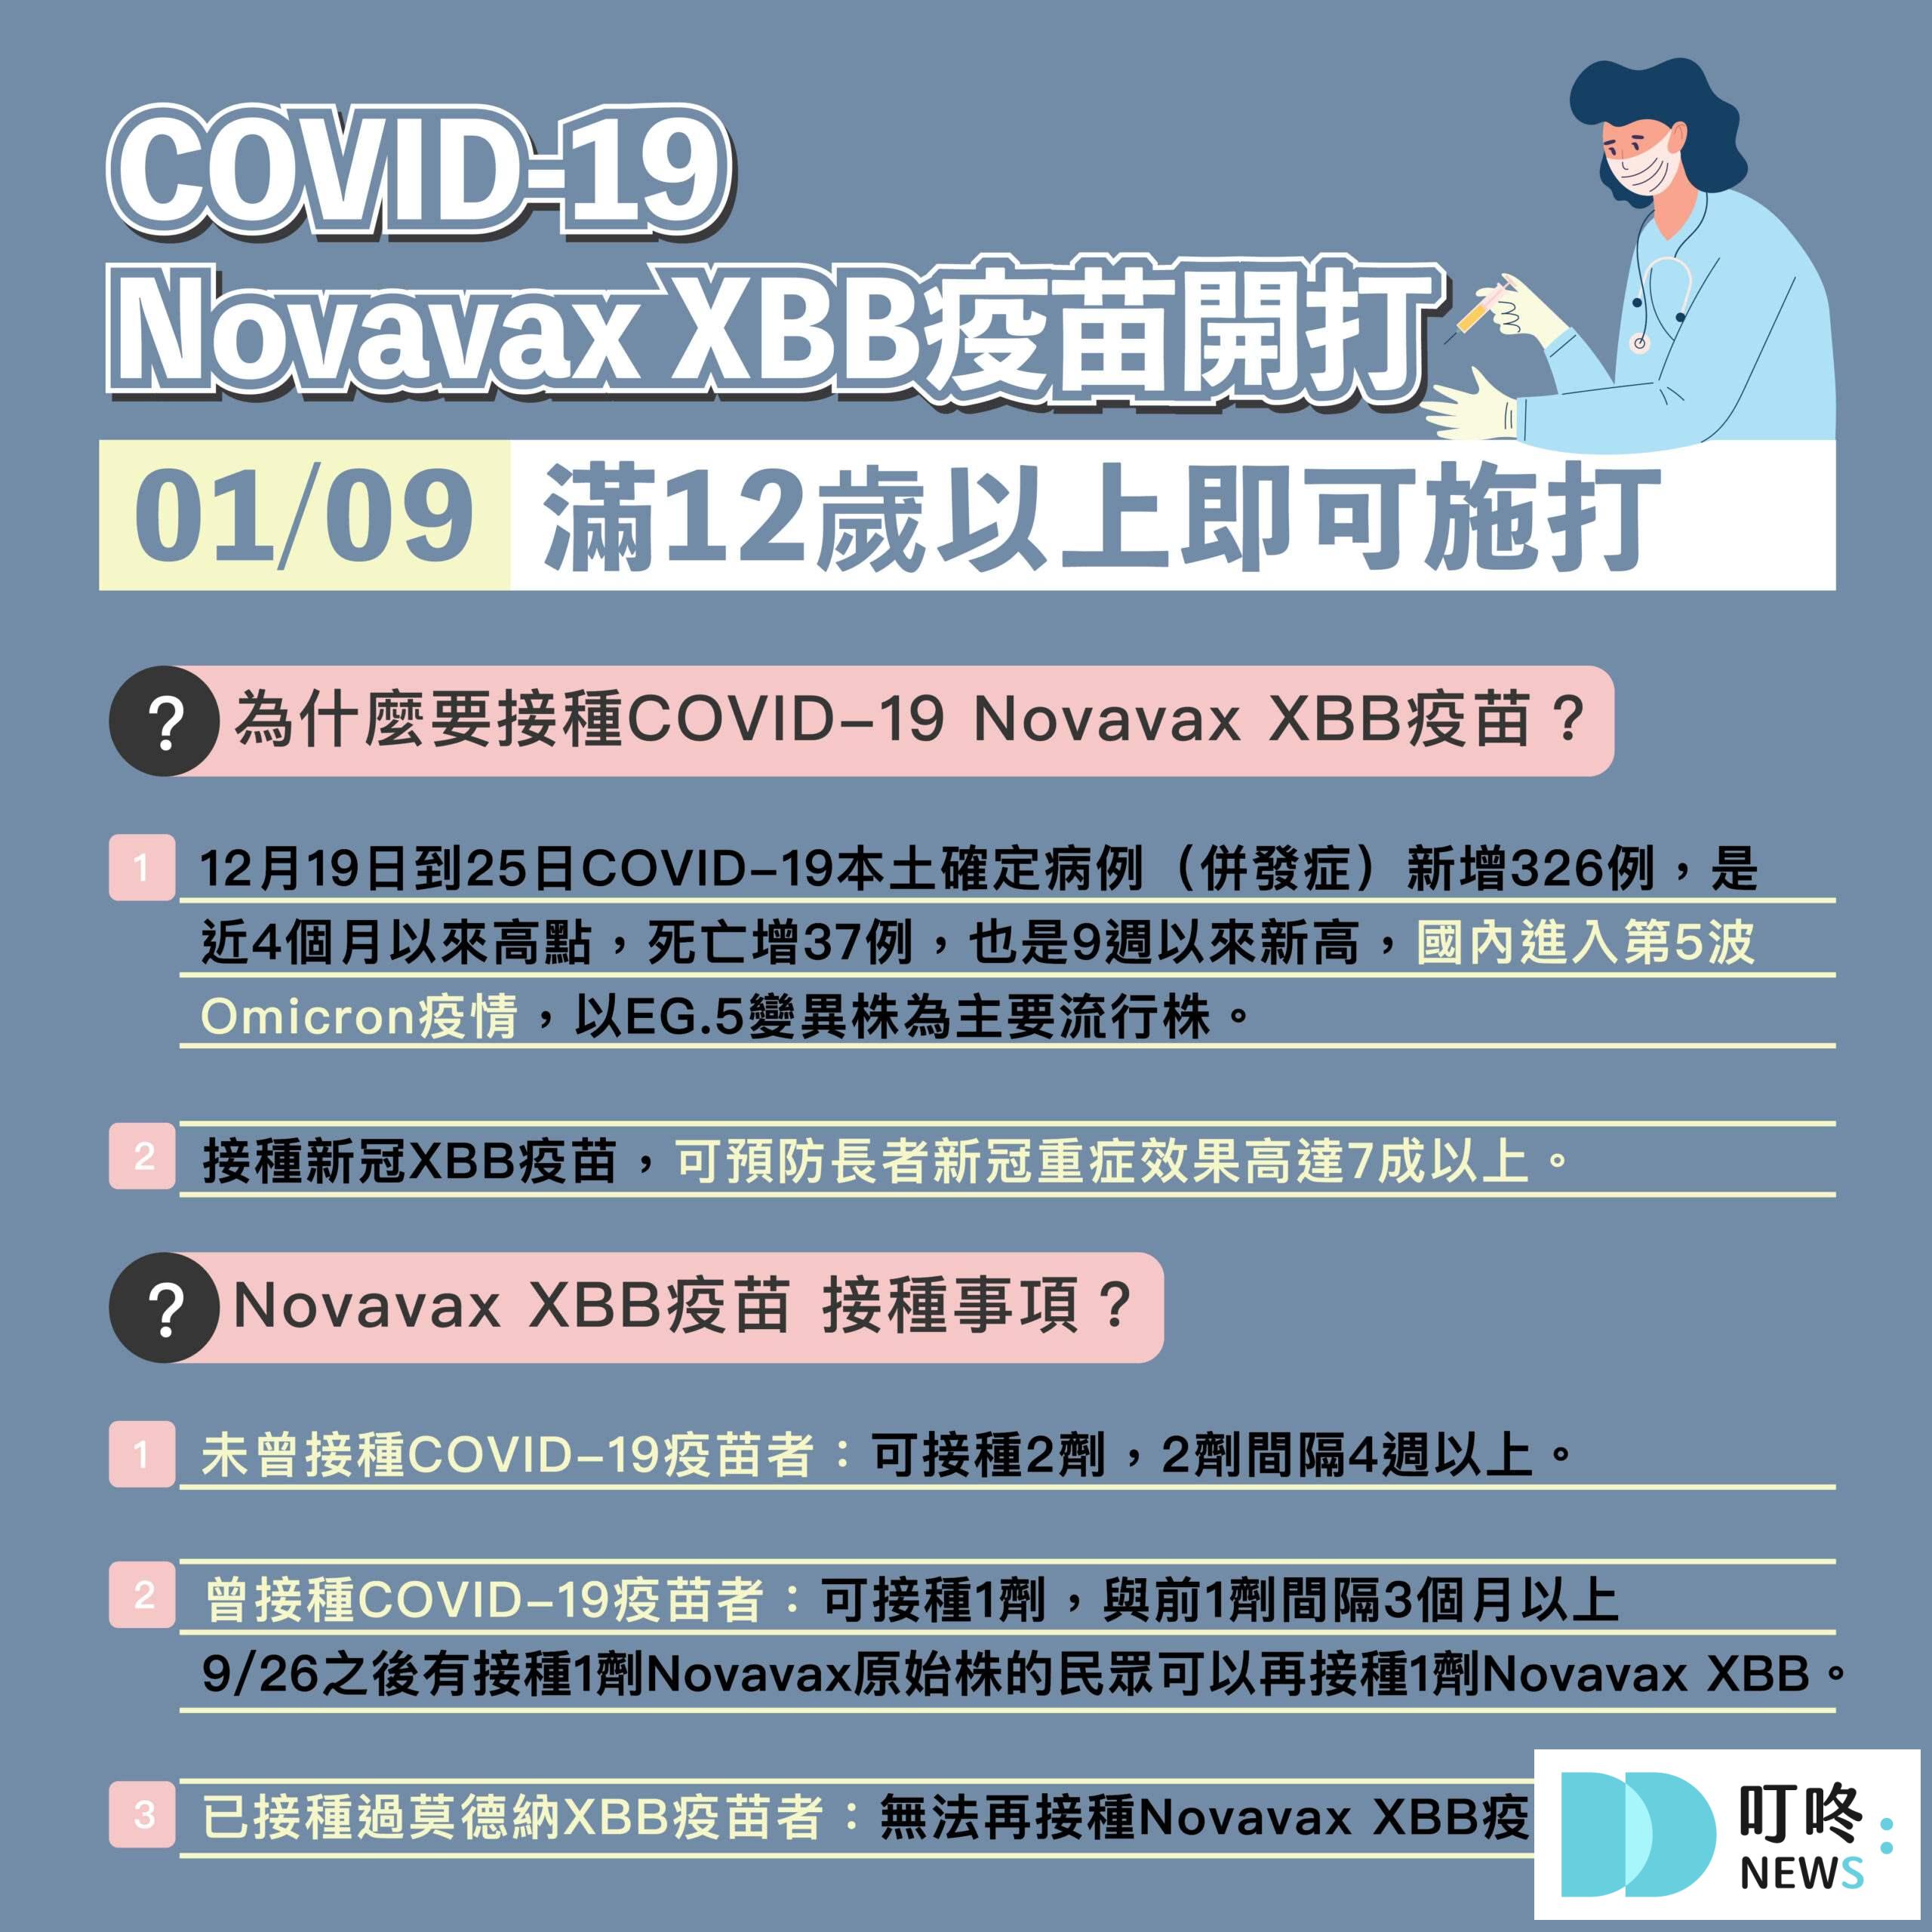 Novavax疫苗懶人包